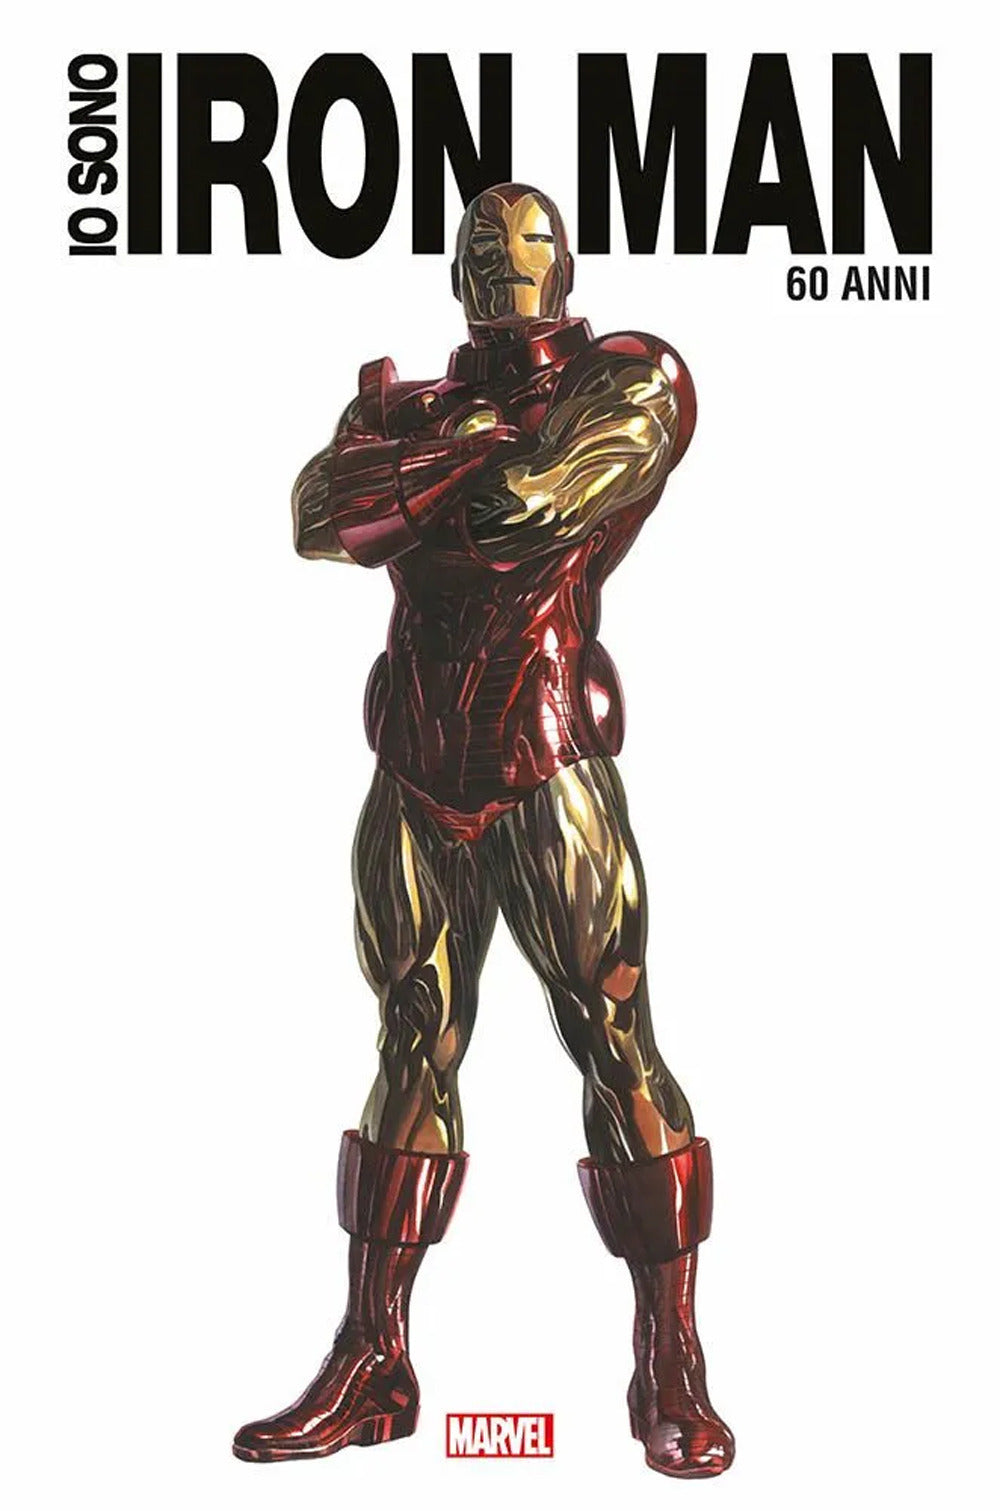 Io sono Iron Man. Ediz. anniversario 60 anni.